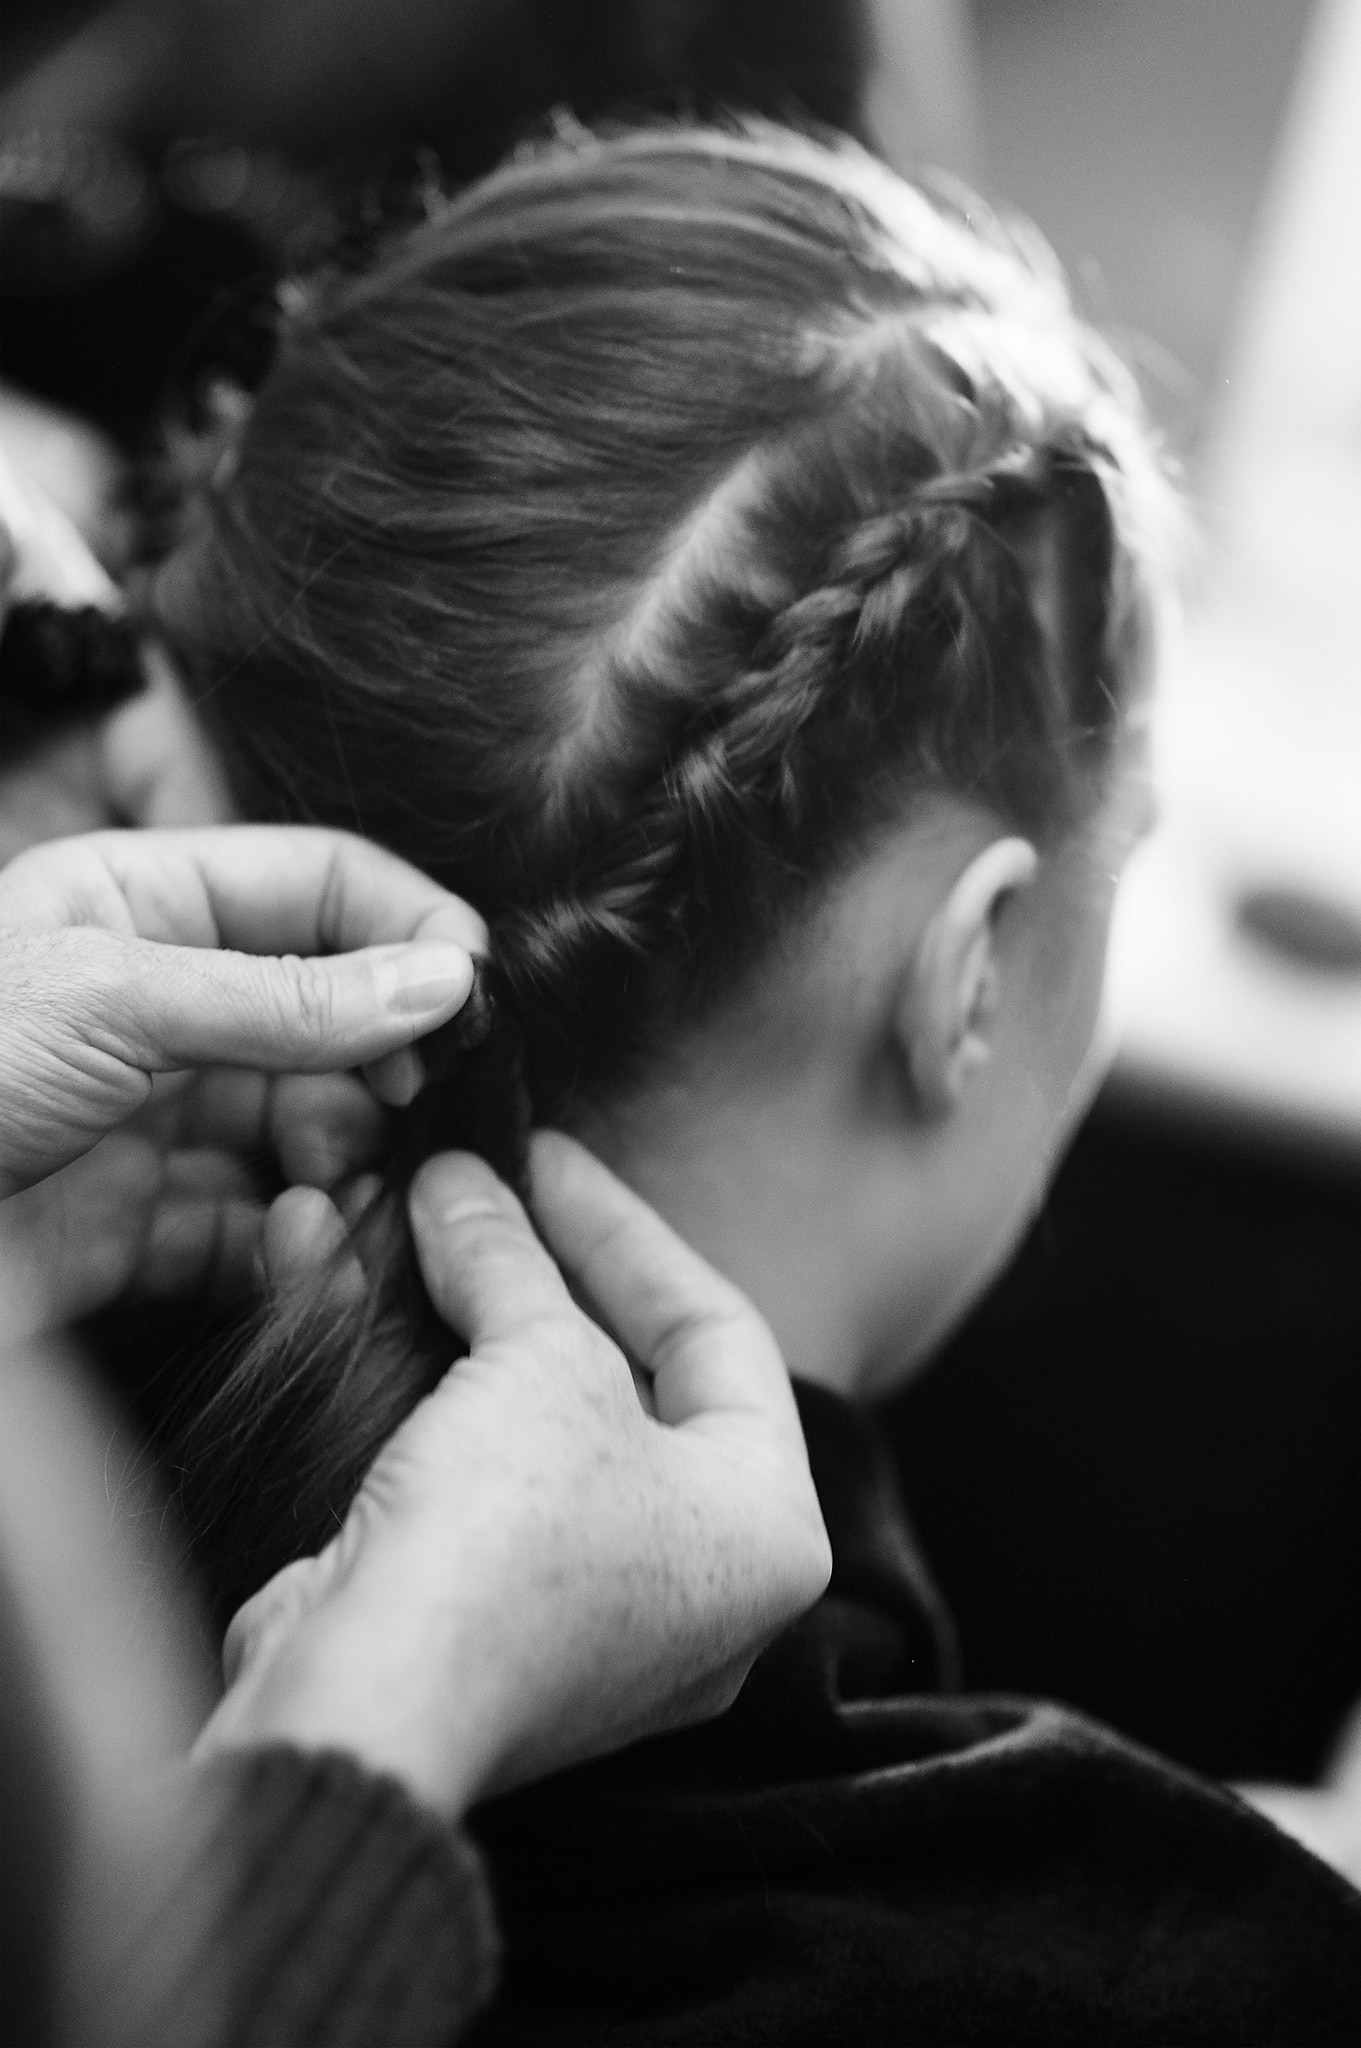 A stylist fixing a model's long, dark wavy hair into a tight braid.